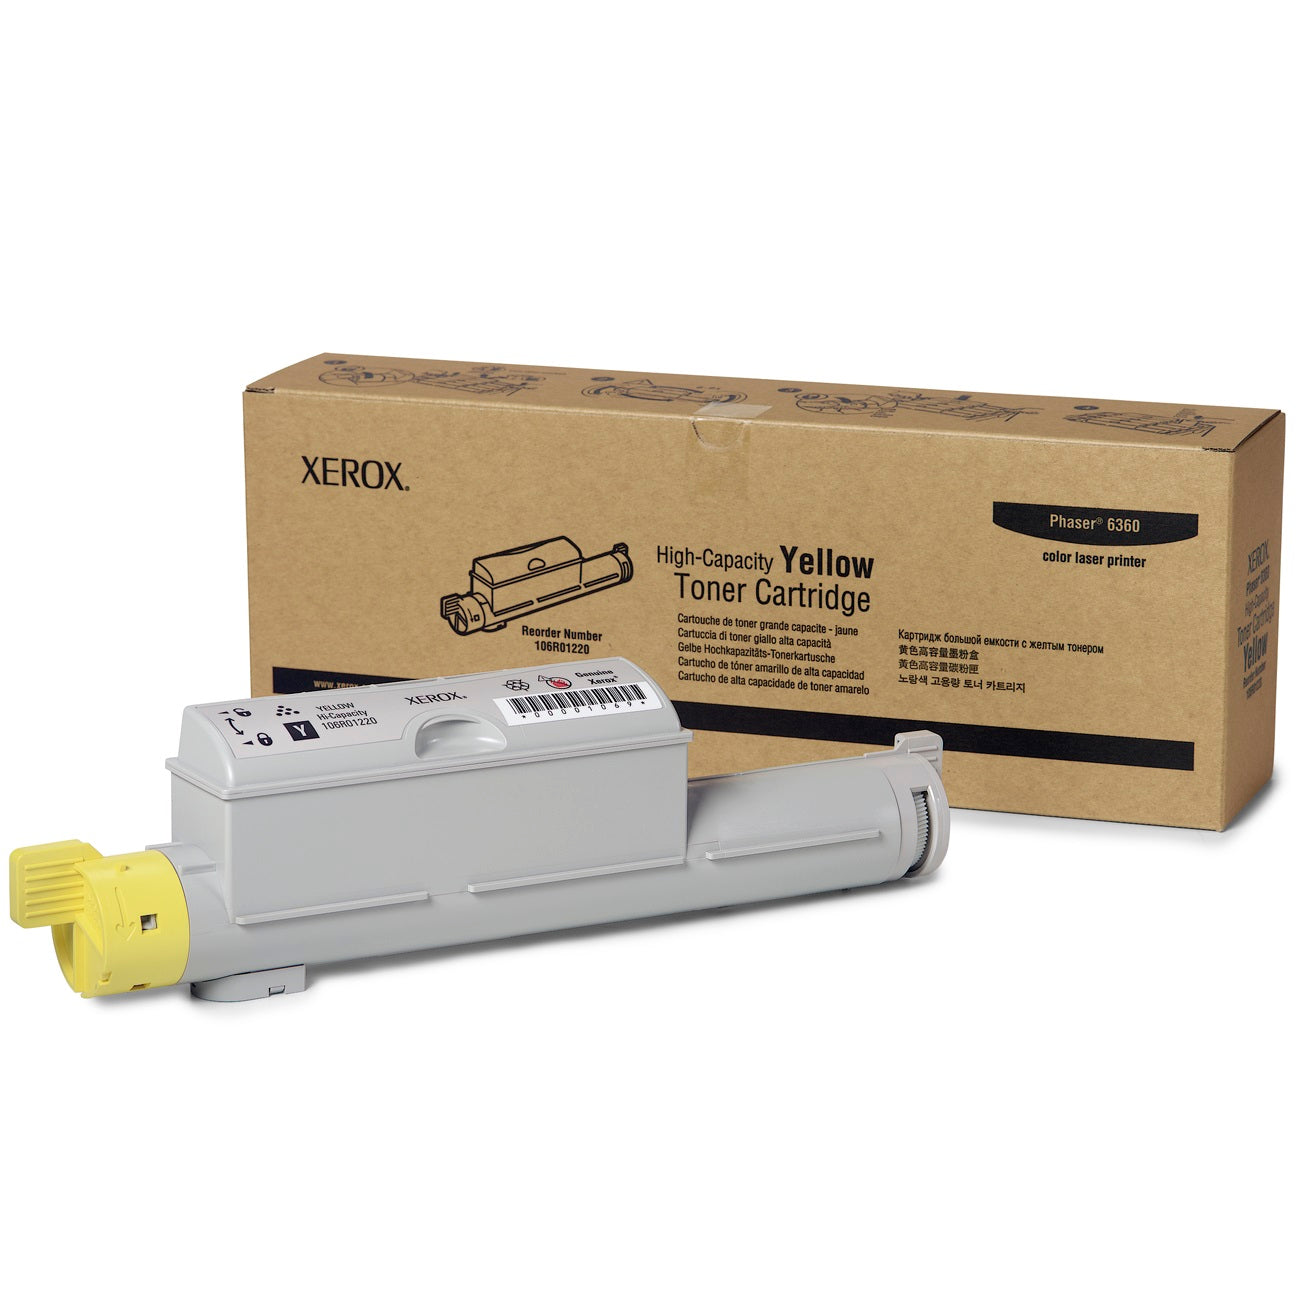 Absolute Toner Xerox 106R01220 Genuine High Capacity Yellow Toner Cartridge For Phaser 6360 printers Original Xerox Cartridges